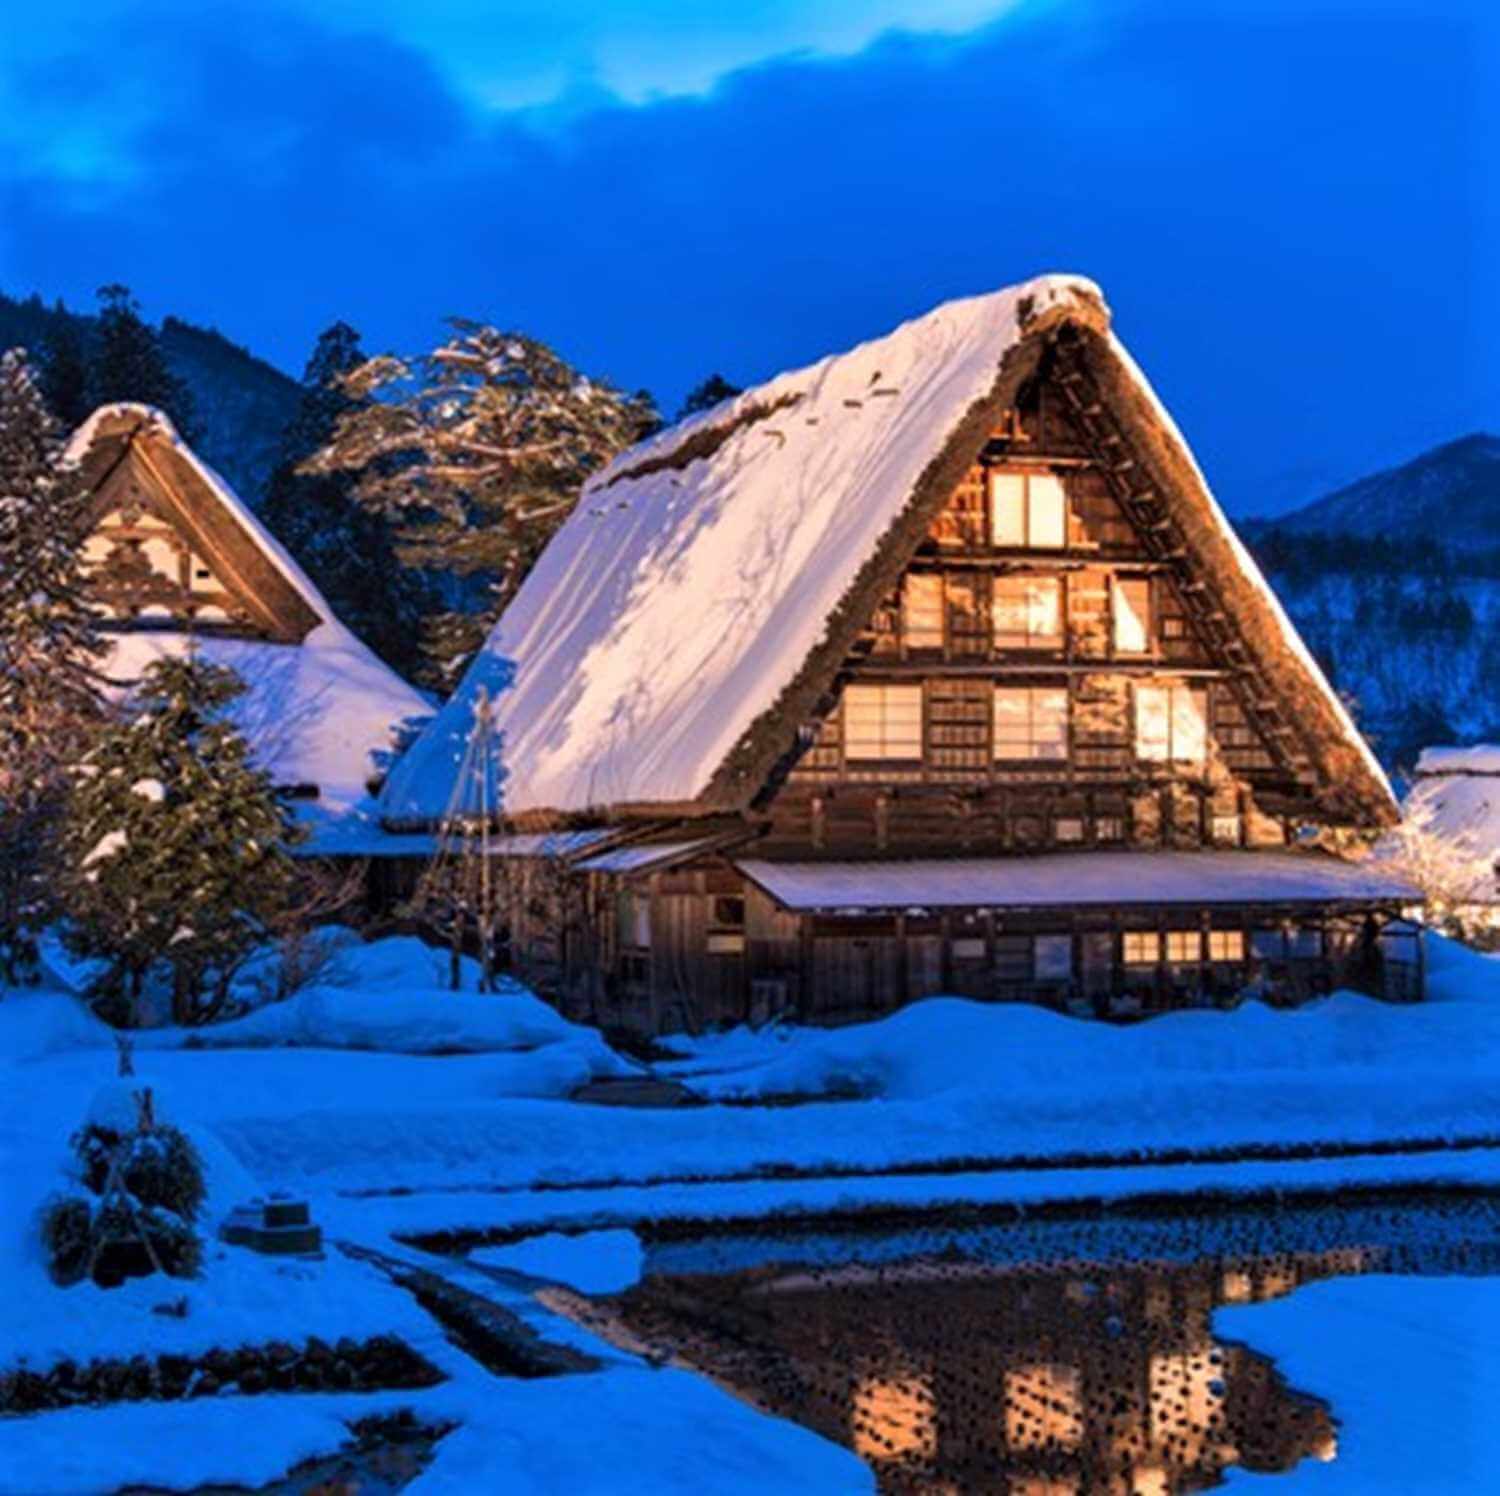 Photos of snow-covered villages2 Shirakawago